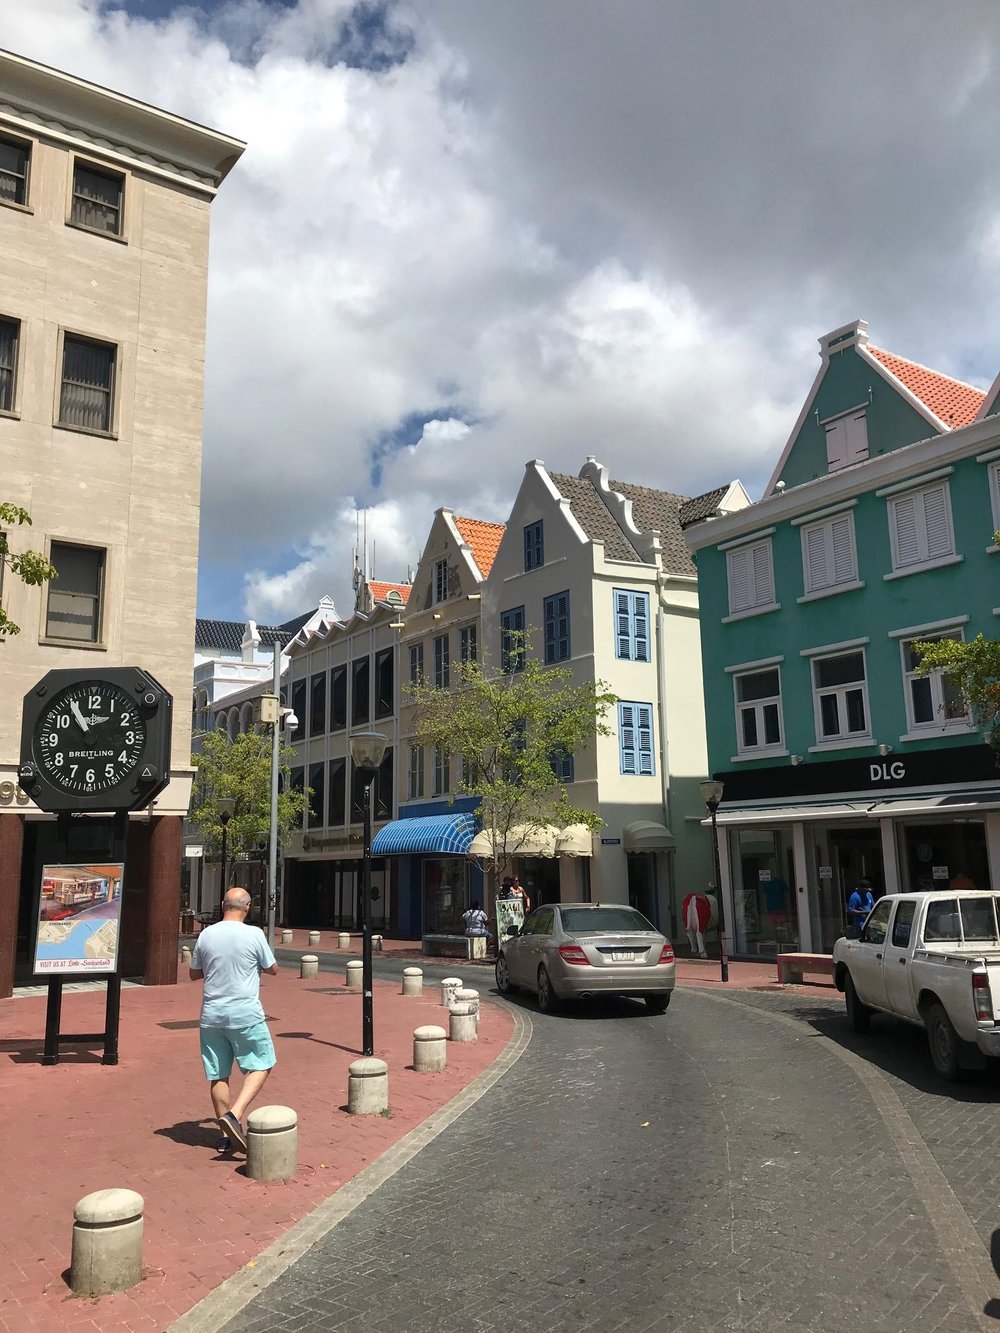 Calles del centro de Willemstad, capital de Curazao